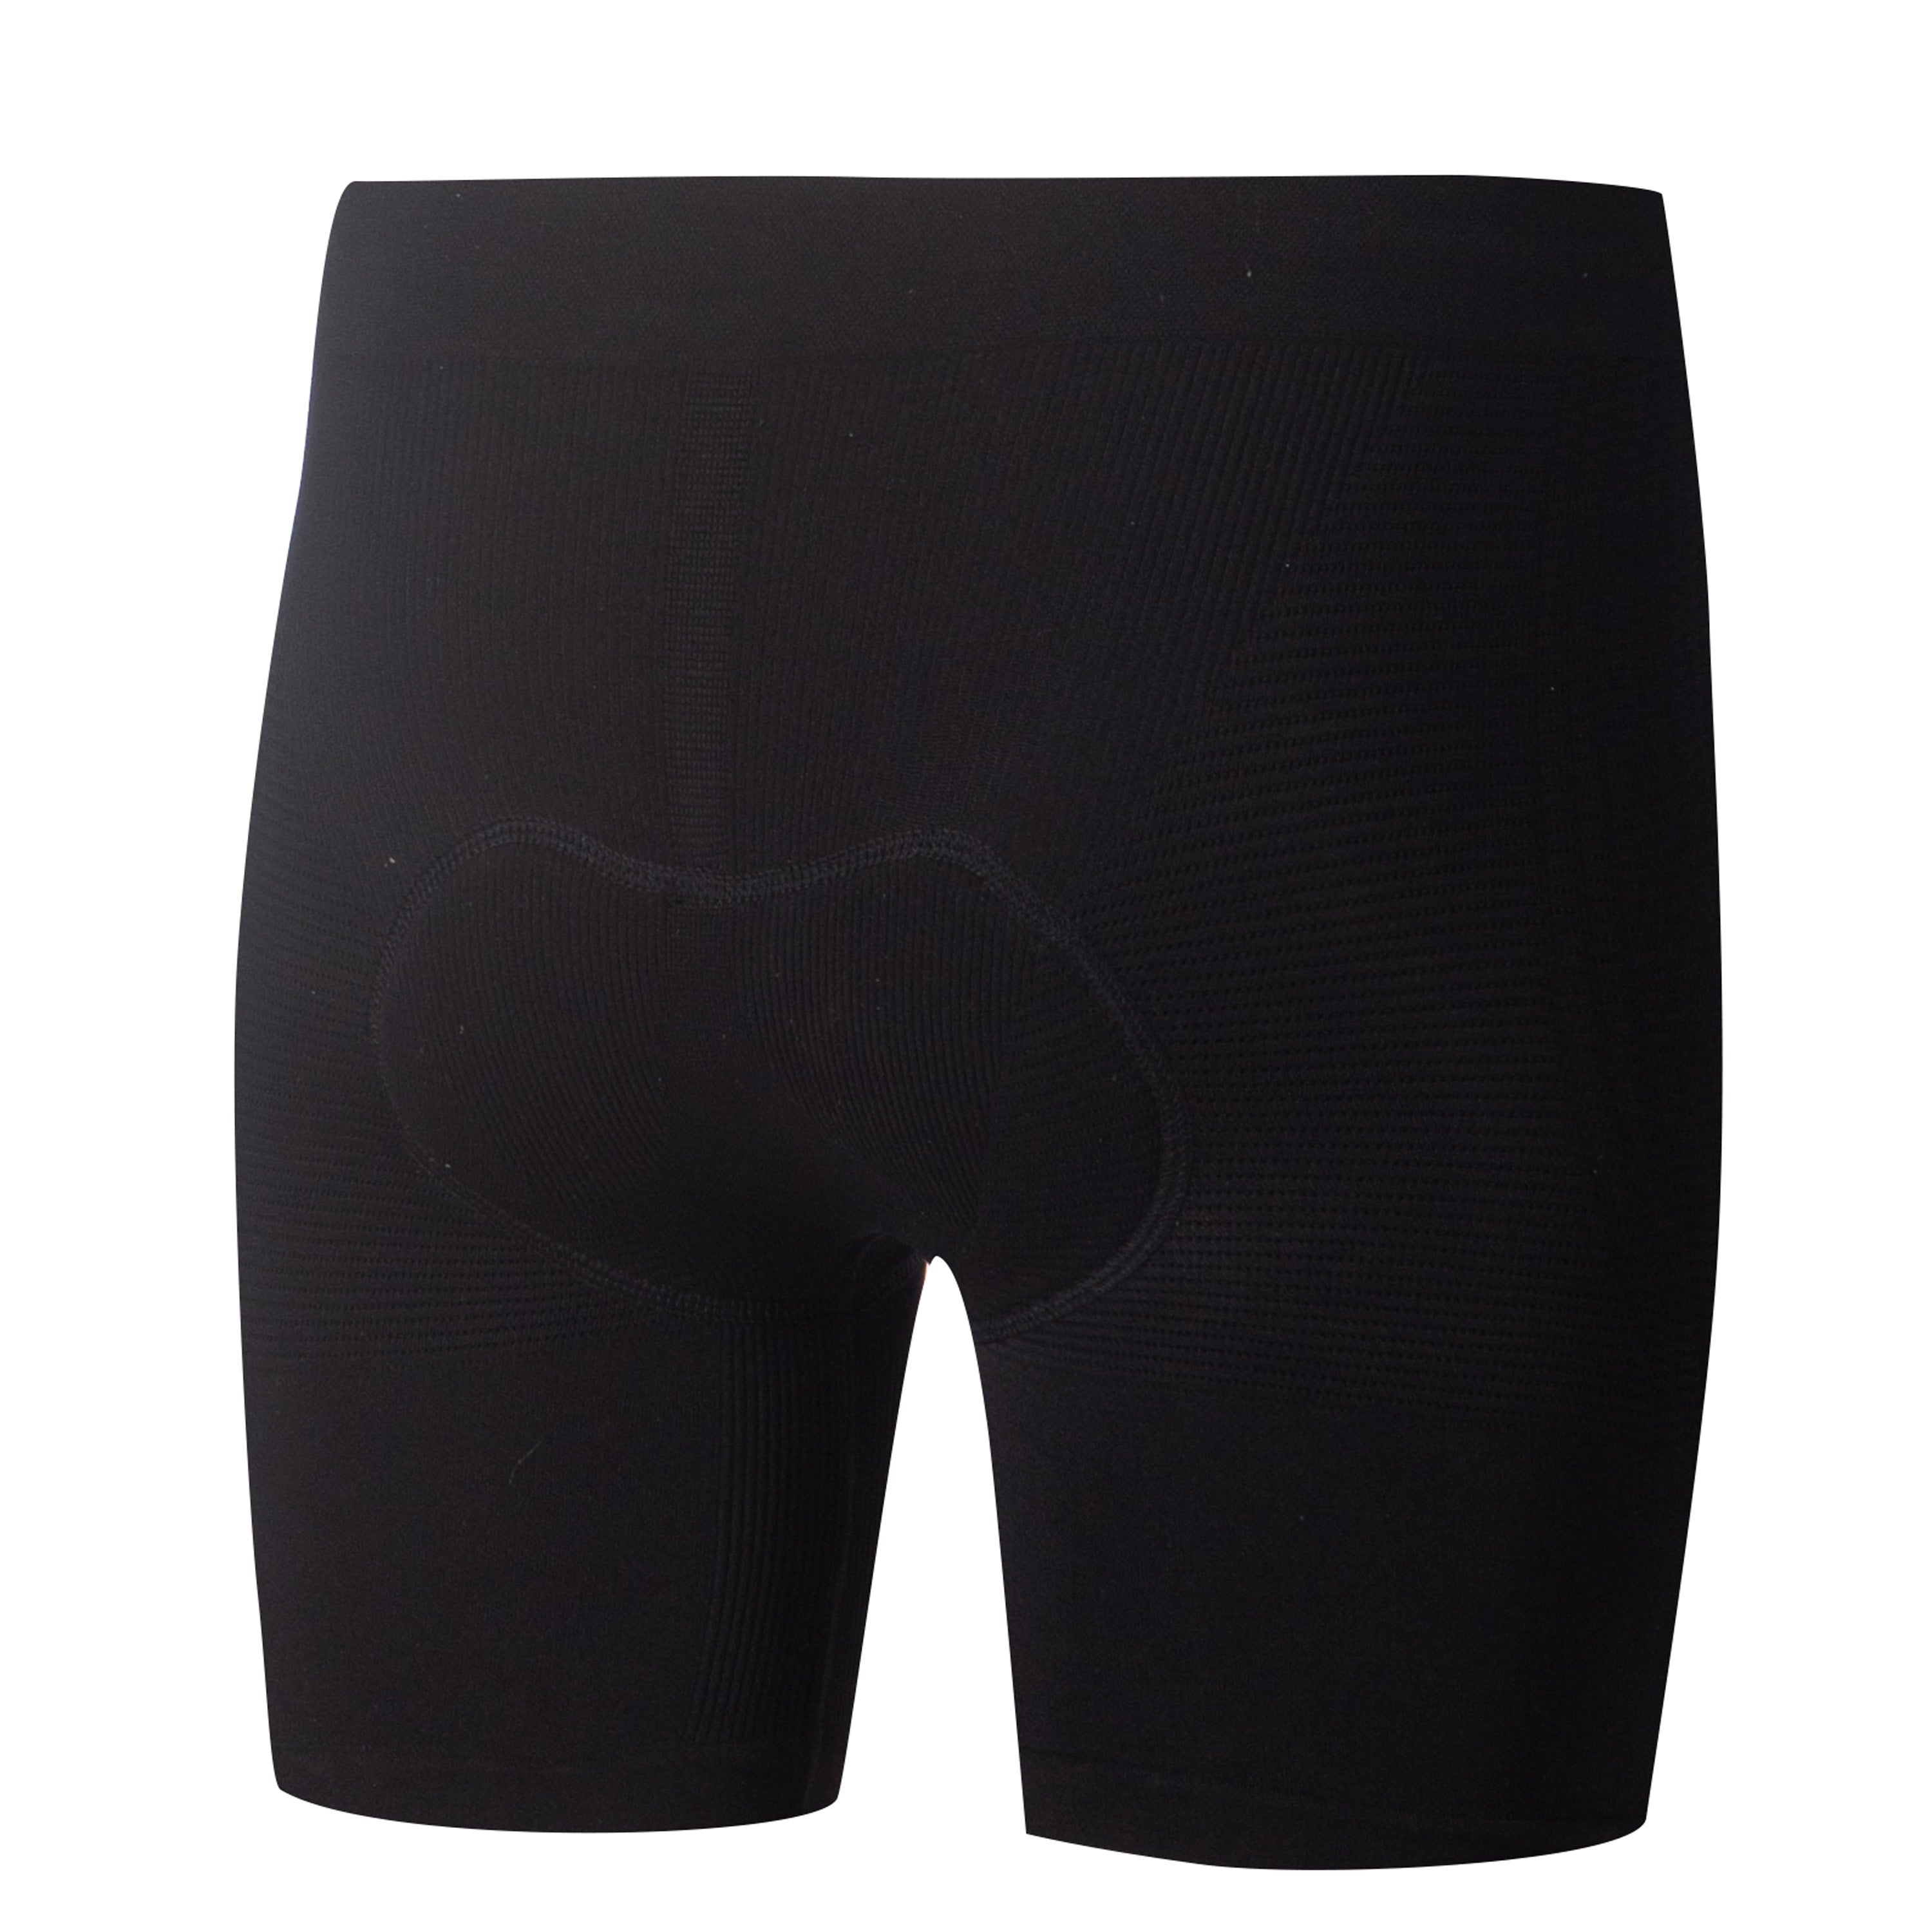 Jëuf Essential women's underwear boxer shorts with pad - Black